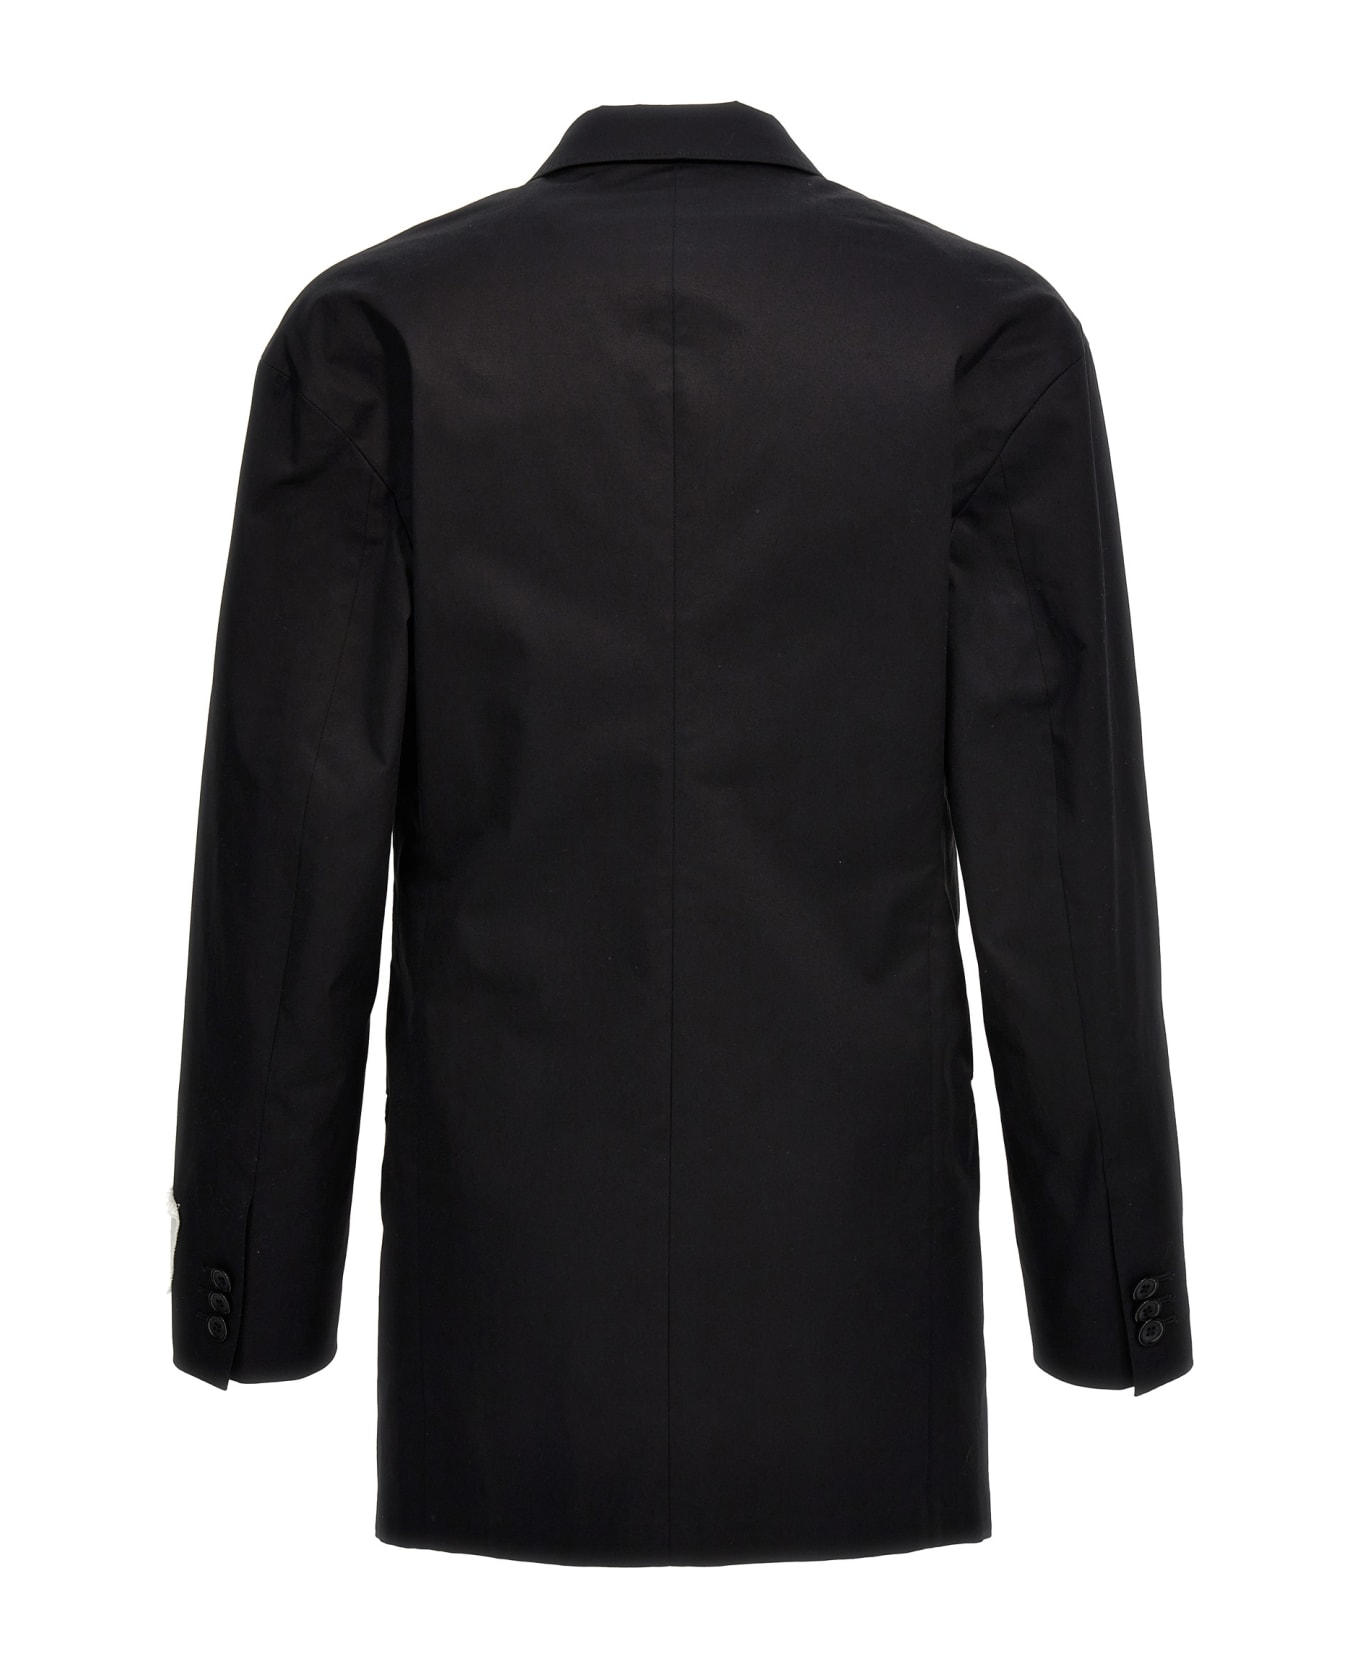 Dolce & Gabbana Blazer Jacket - black コート